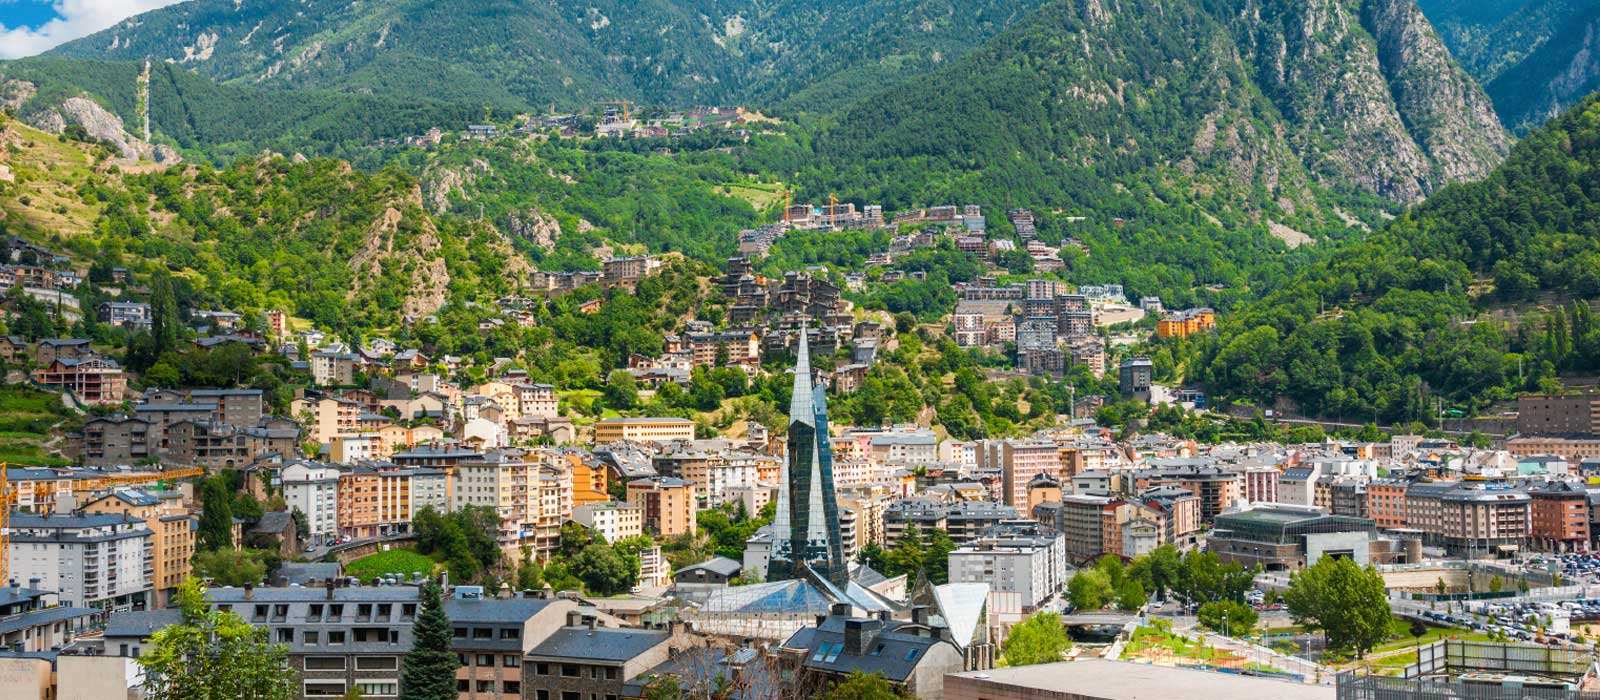 The Andorra la Vella city photos and hotels